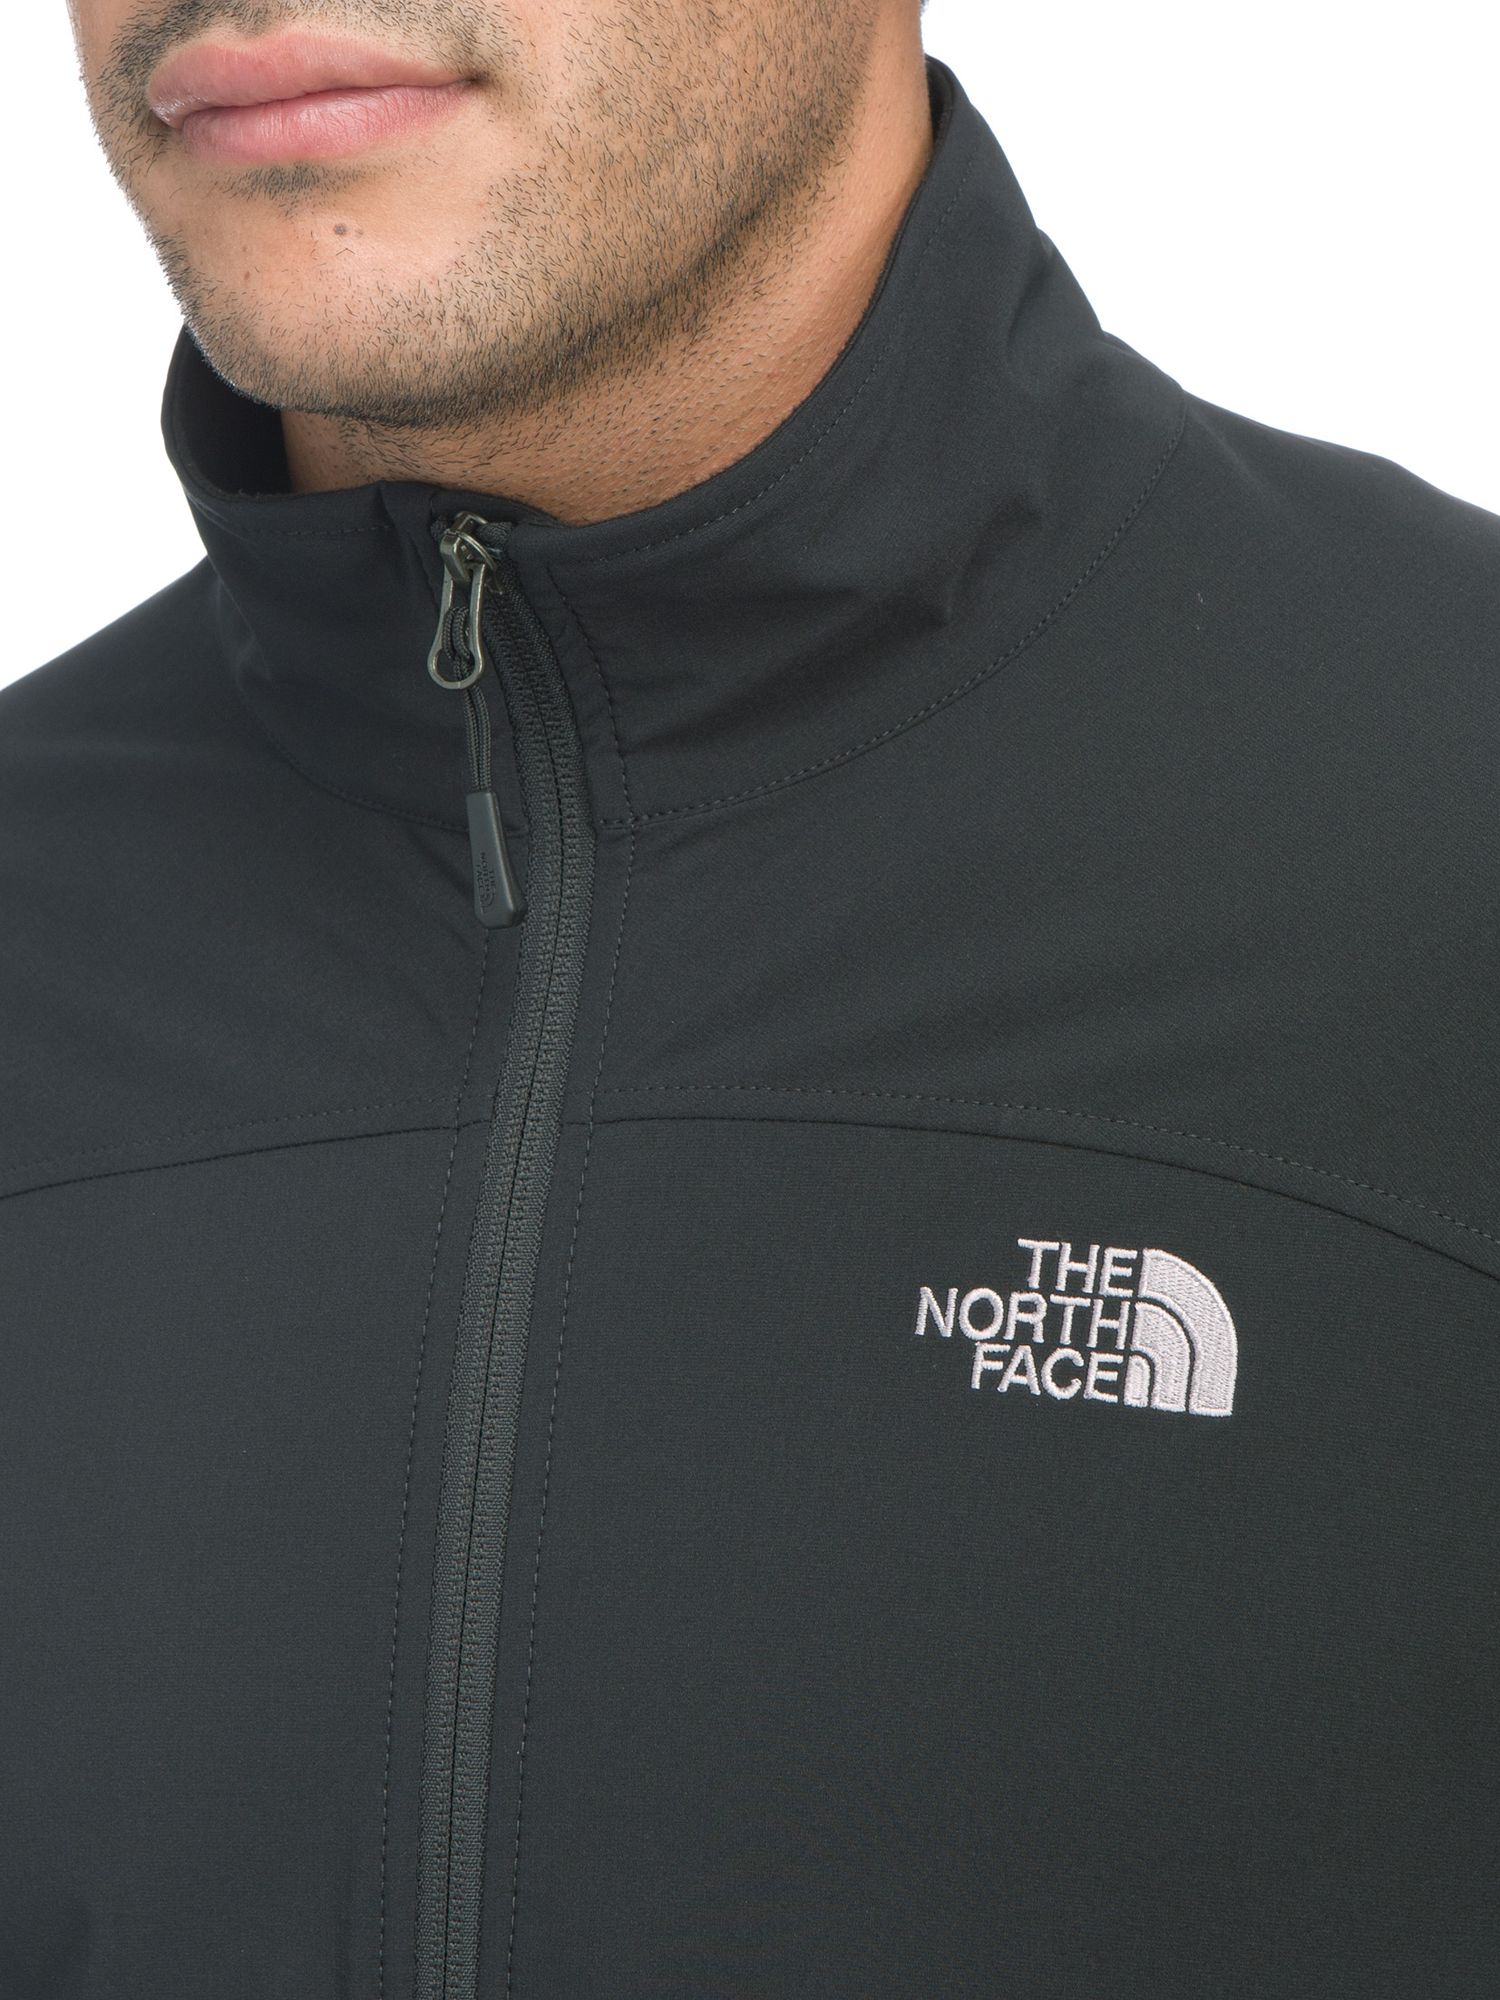 north face softshell jackets